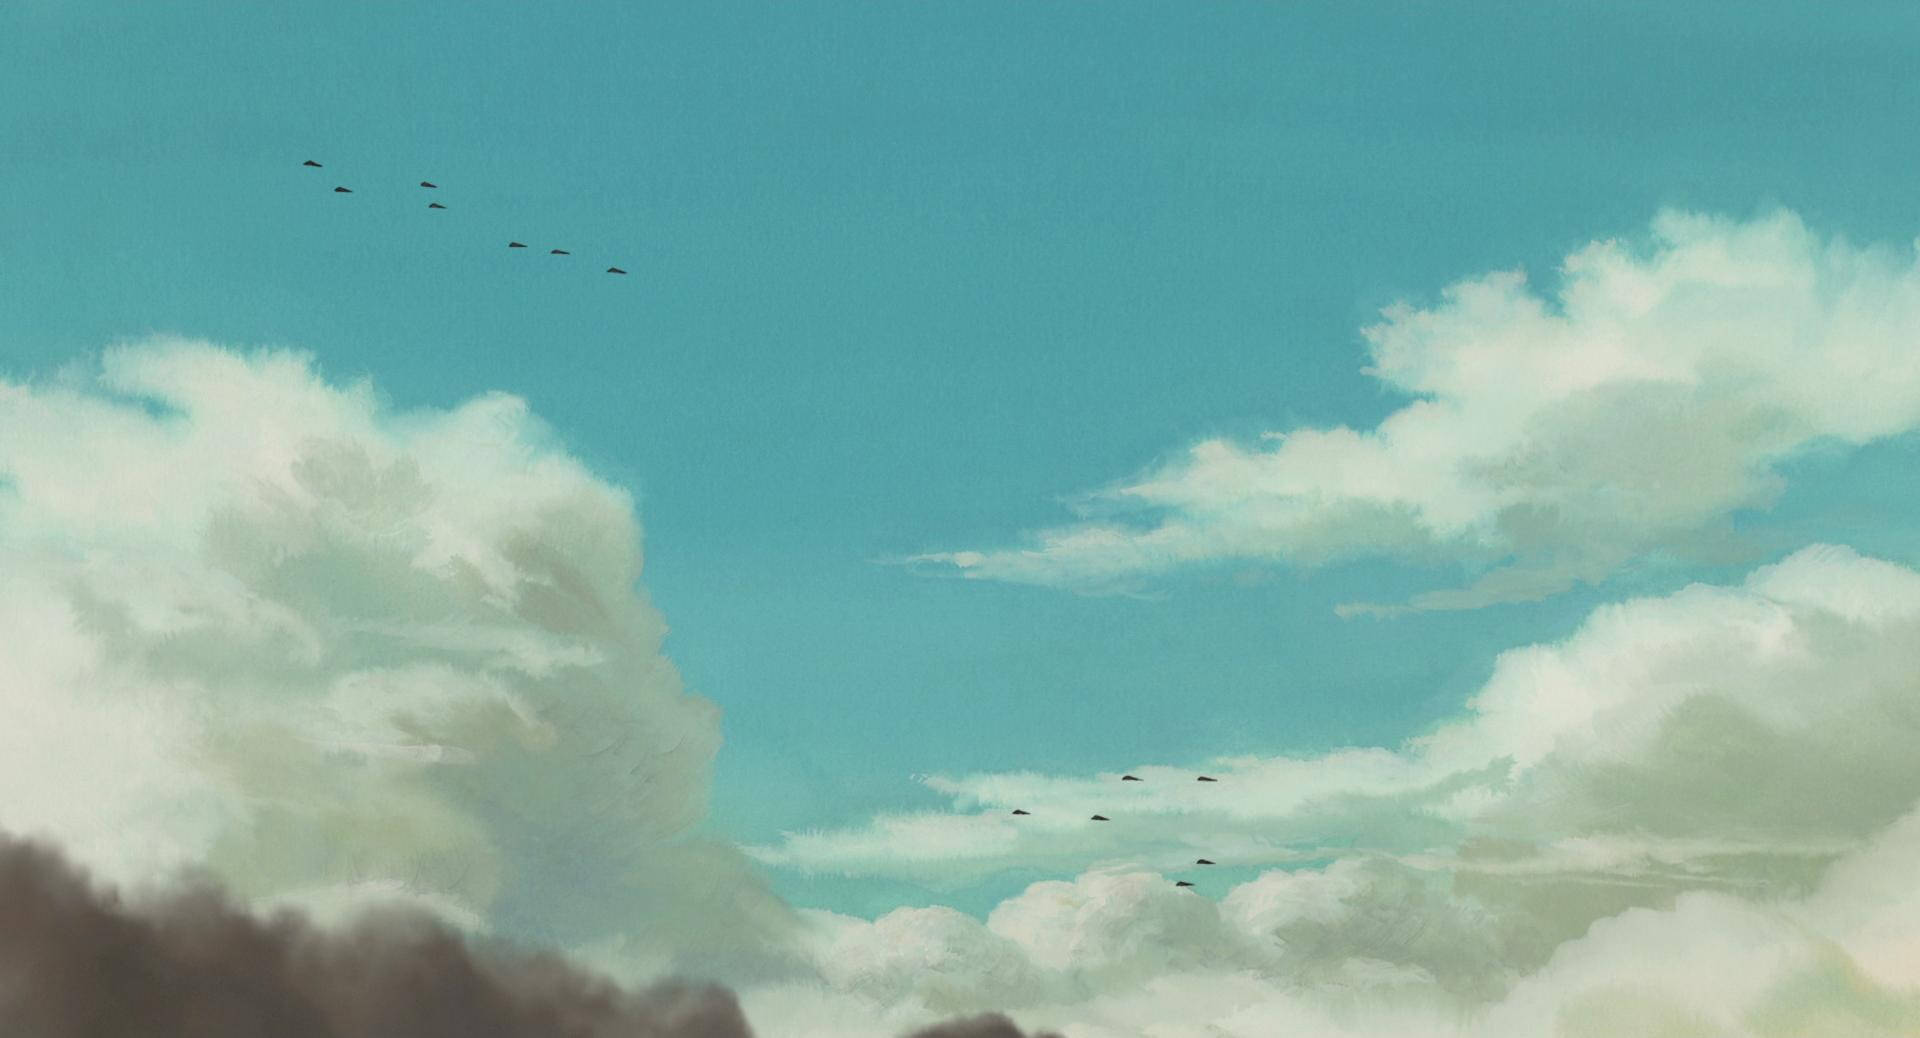 Studio Ghibli Scenery Blue Sky With Planes